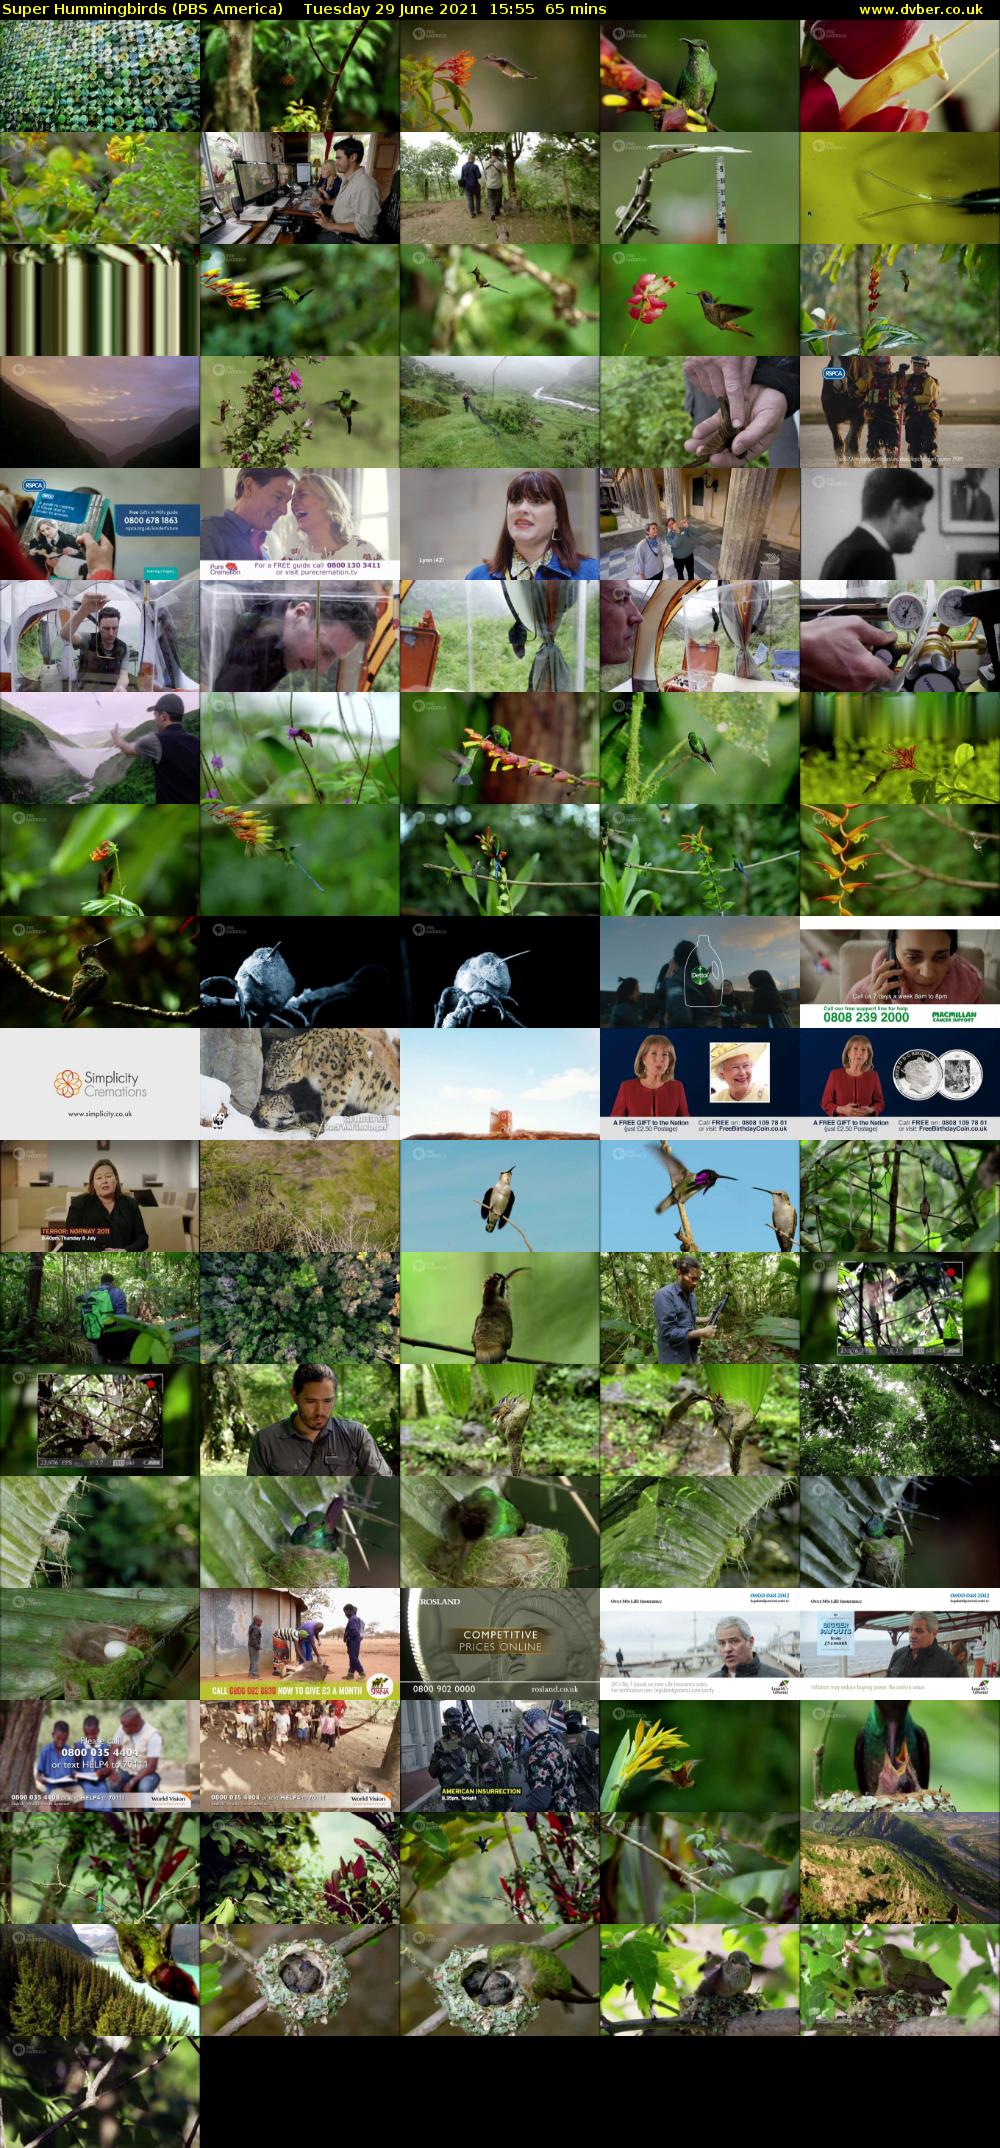 Super Hummingbirds (PBS America) Tuesday 29 June 2021 15:55 - 17:00